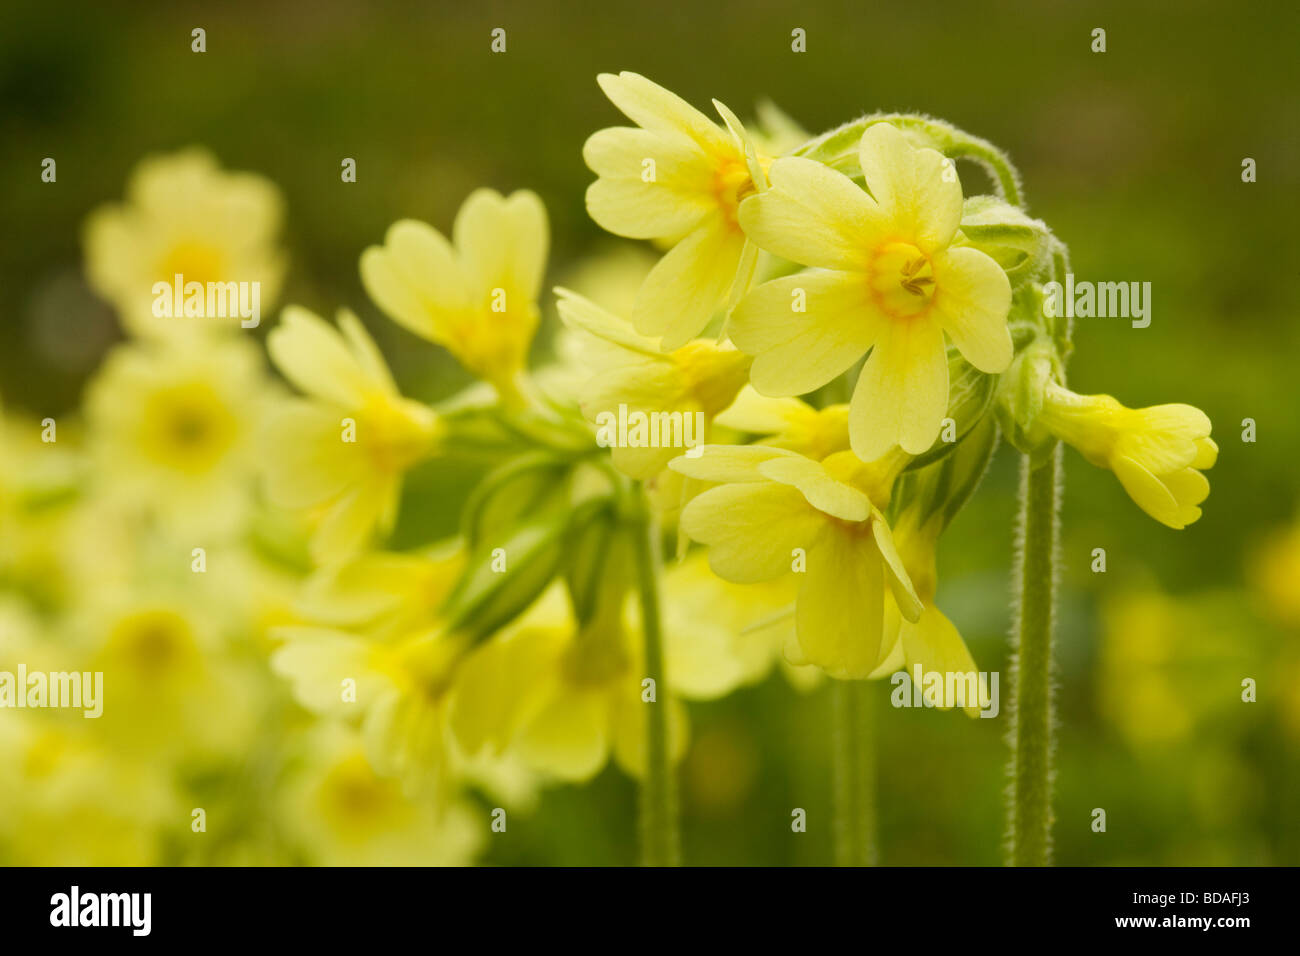 Oxlip flowers in Hayley Wood, Cambridgeshire. Stock Photo